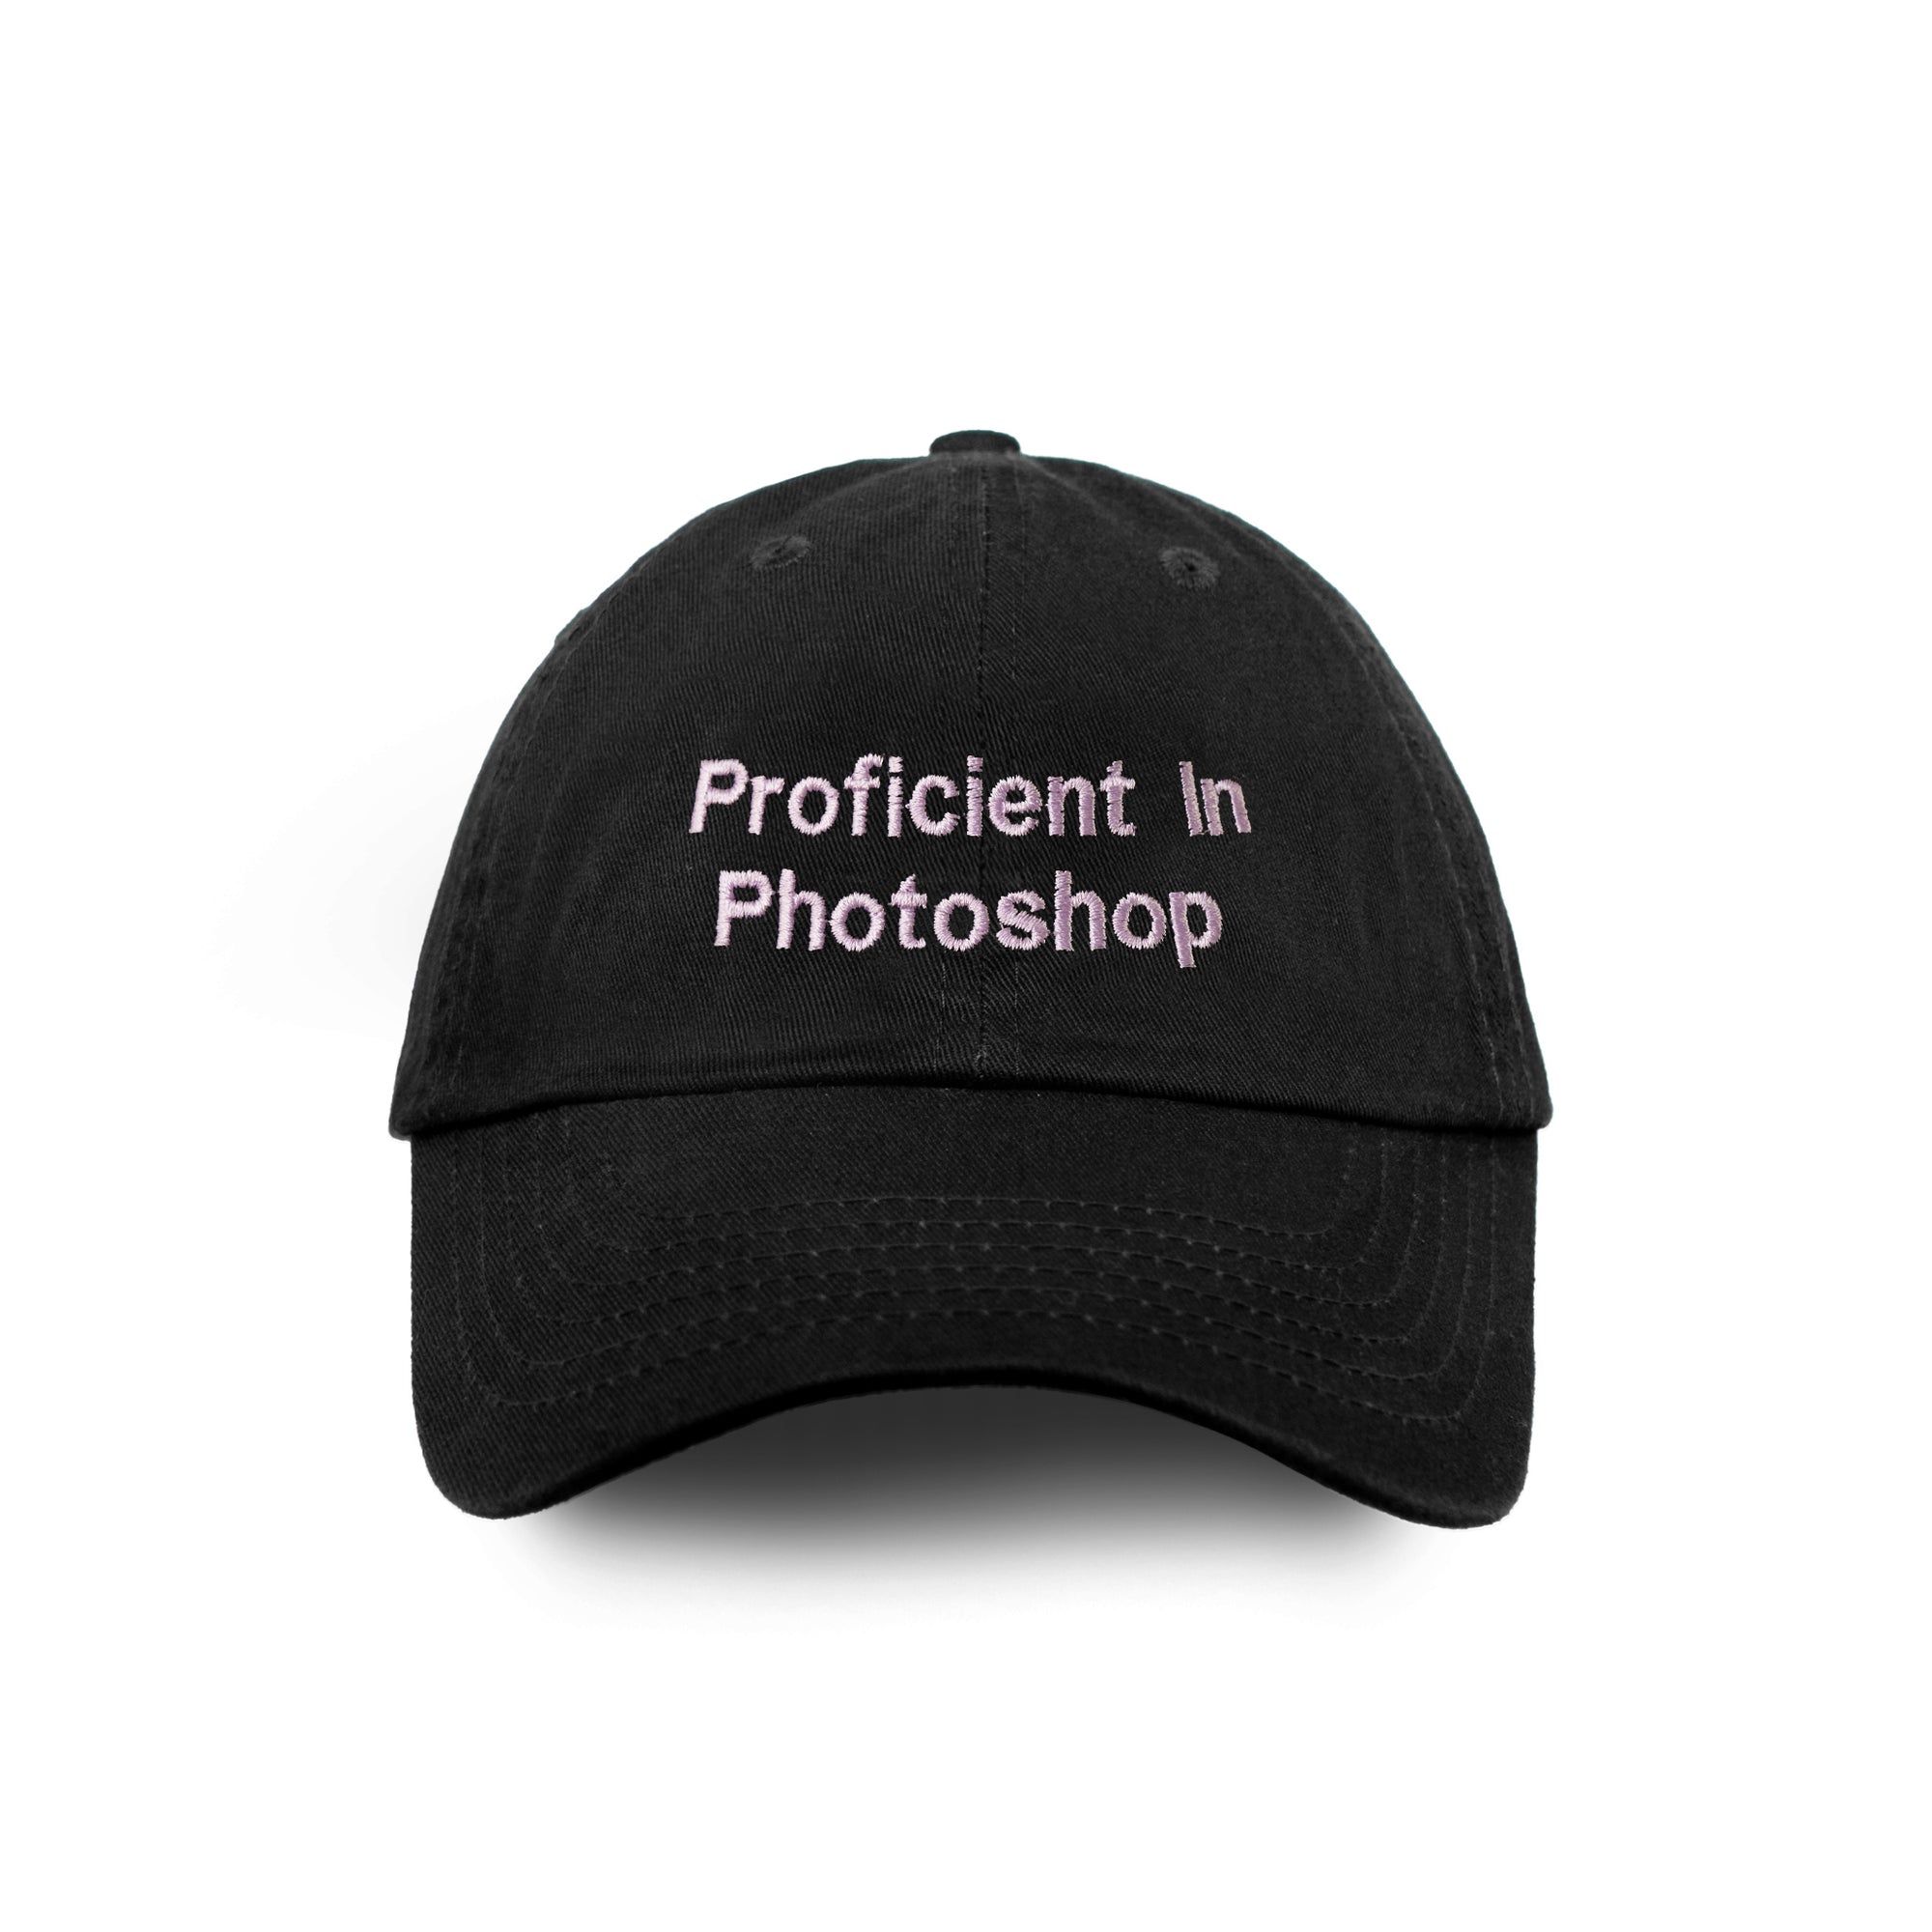 PROFICIENT IN PHOTOSHOP